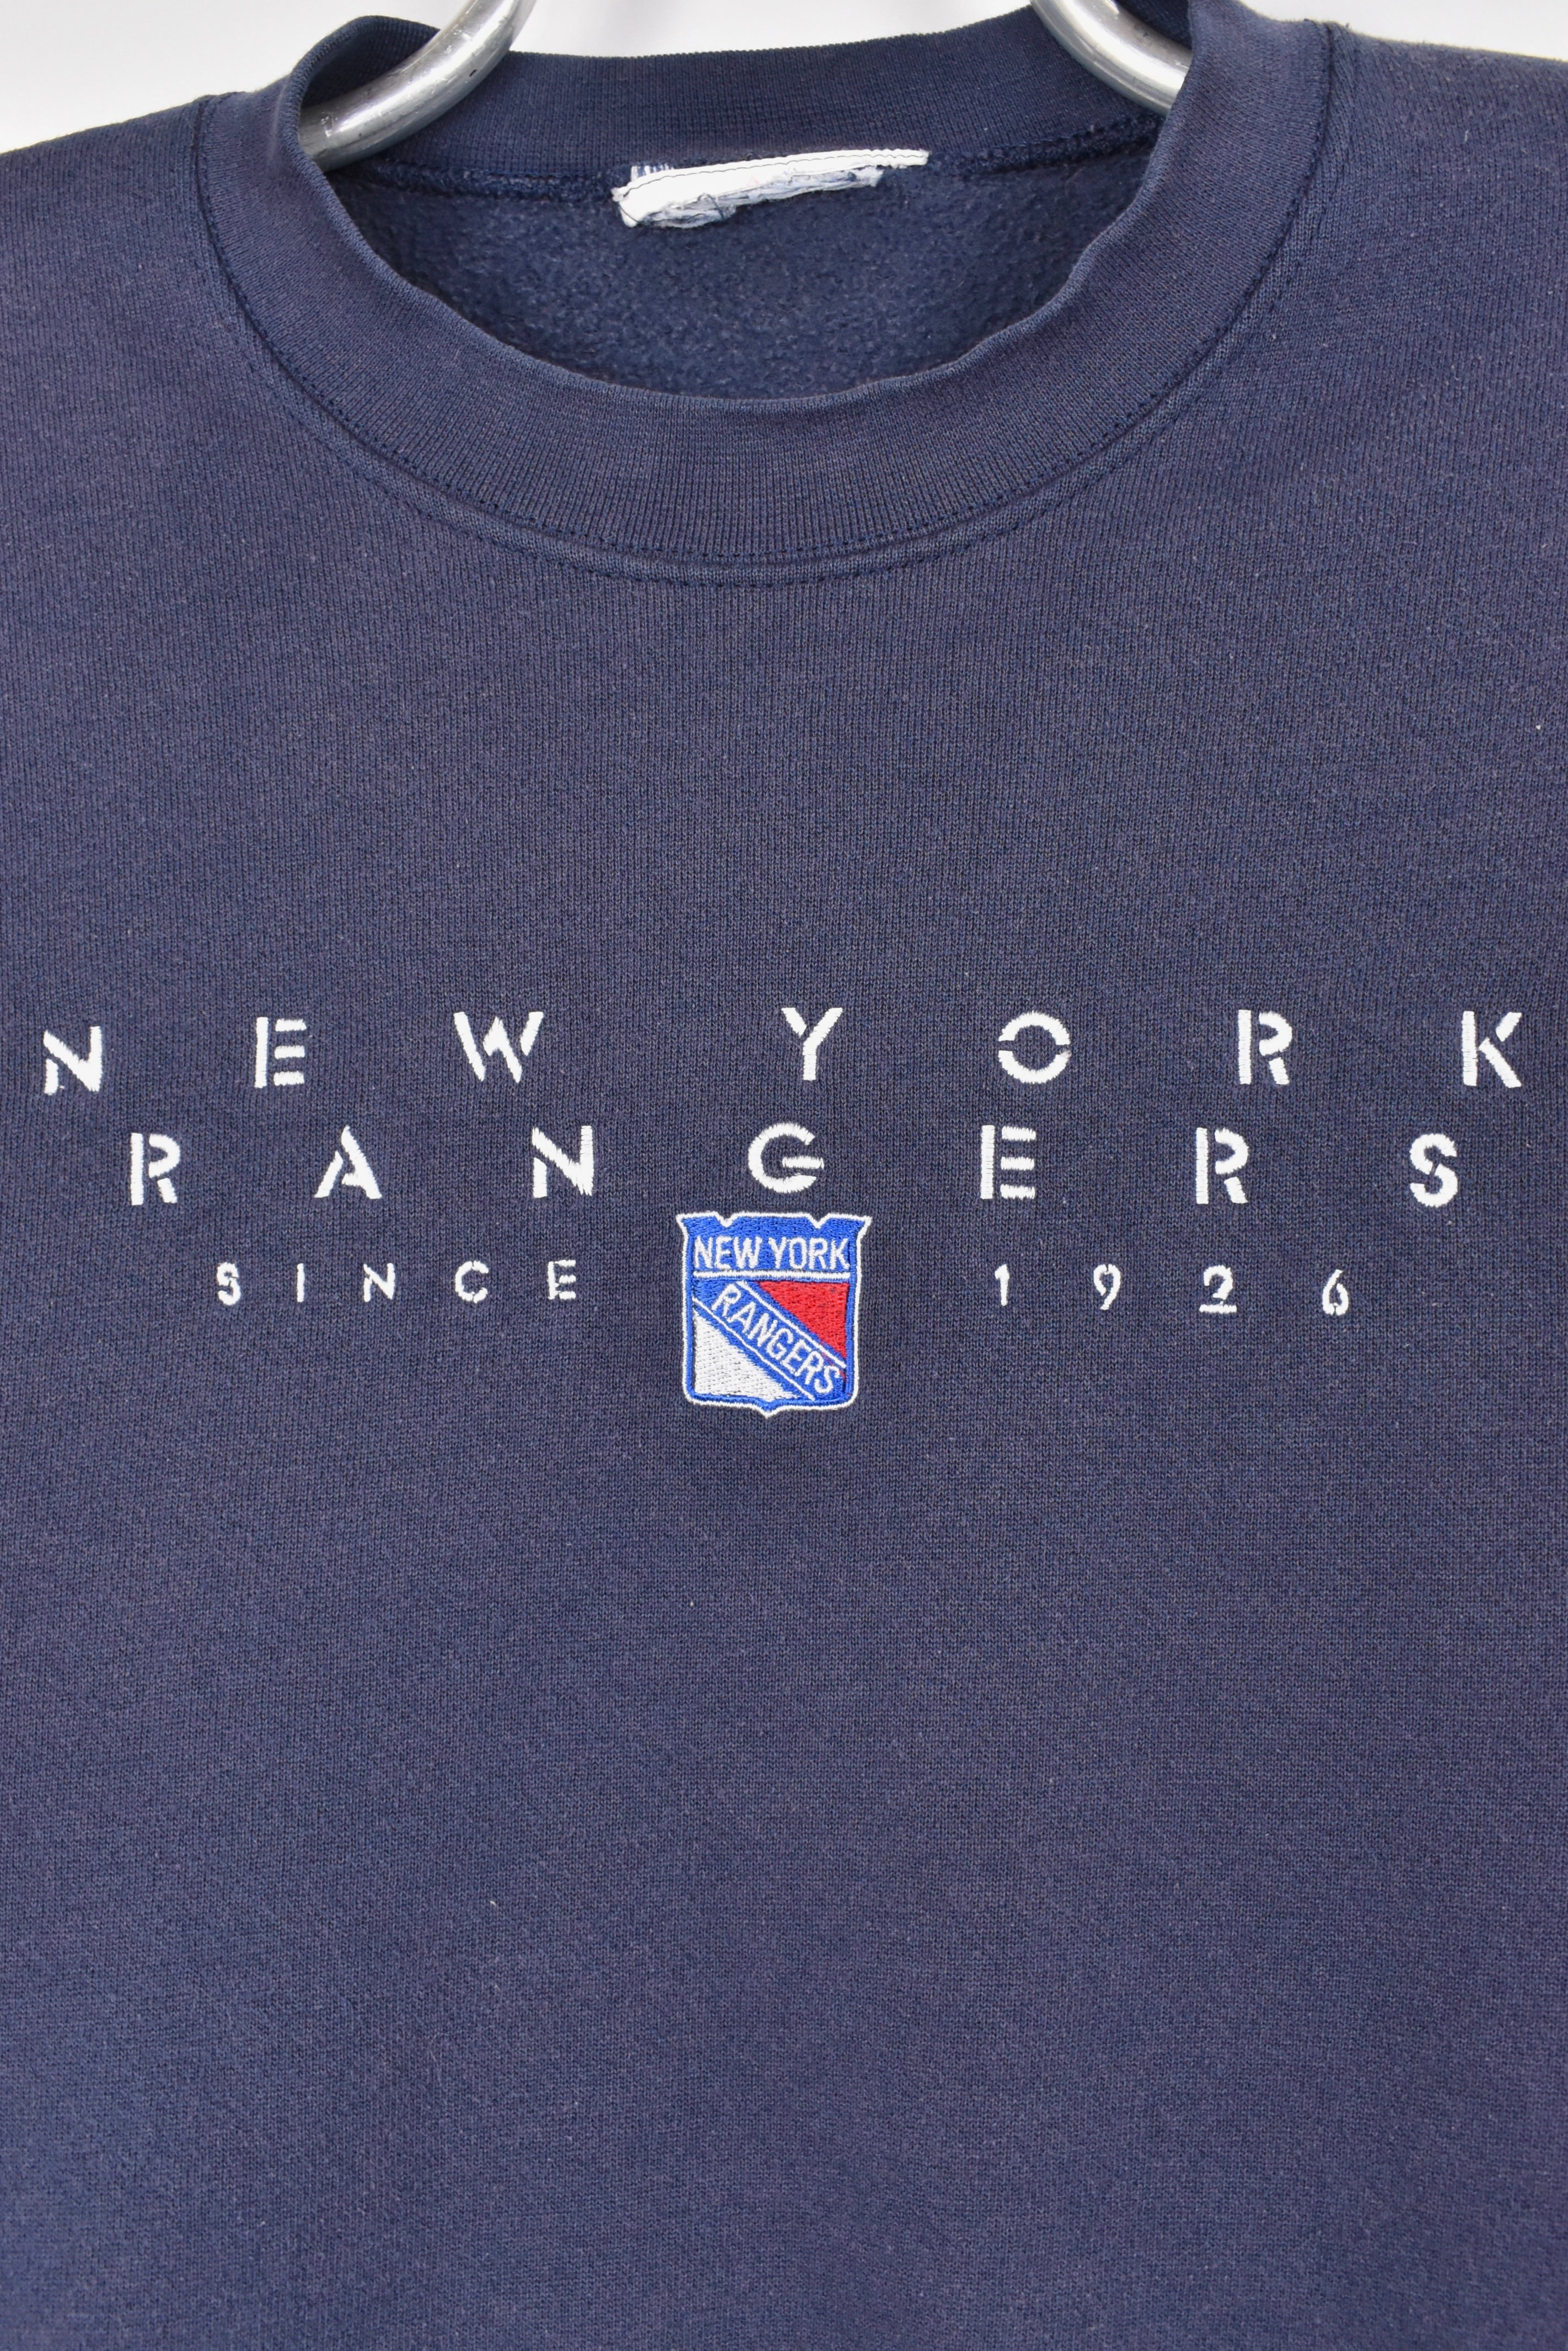 vintage new york rangers sweatshirt